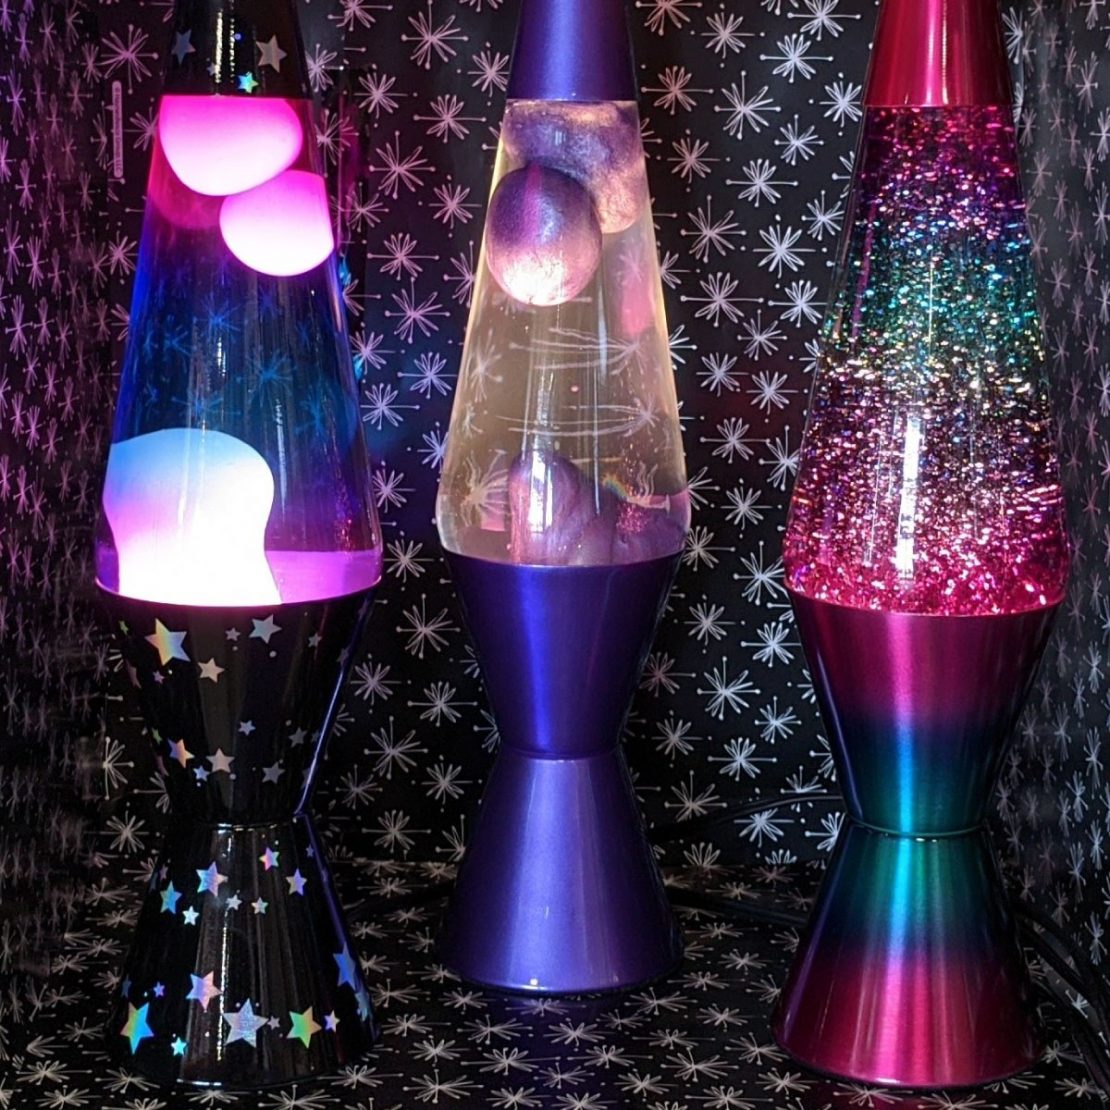 Lava and Glitter Lamps